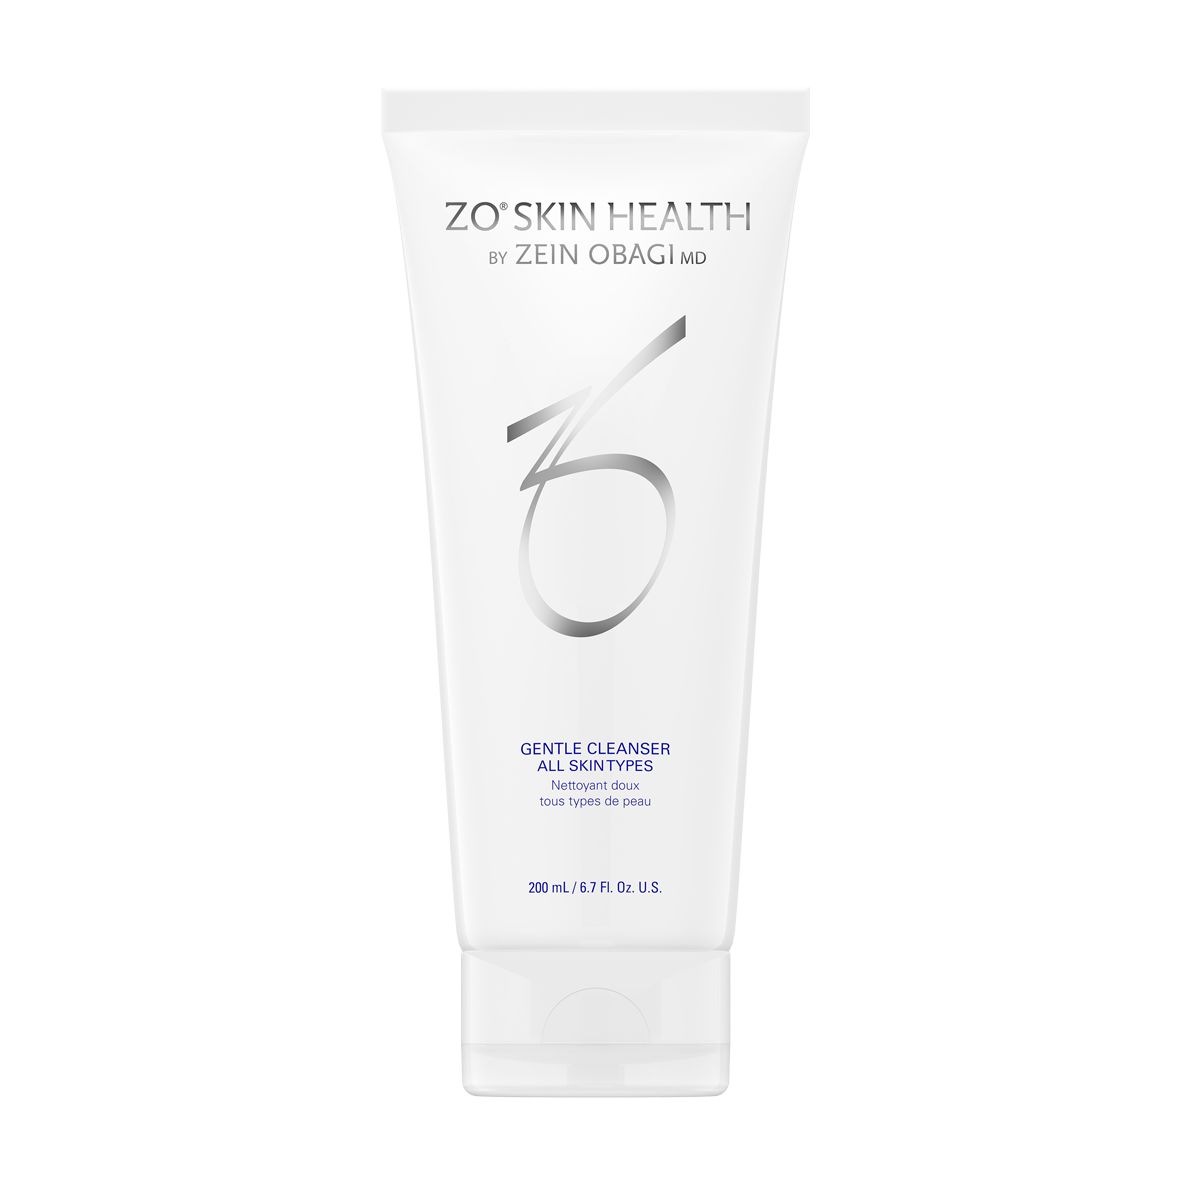  Sữa Rửa Mặt Gentle Cleanser ZO Skin Health 